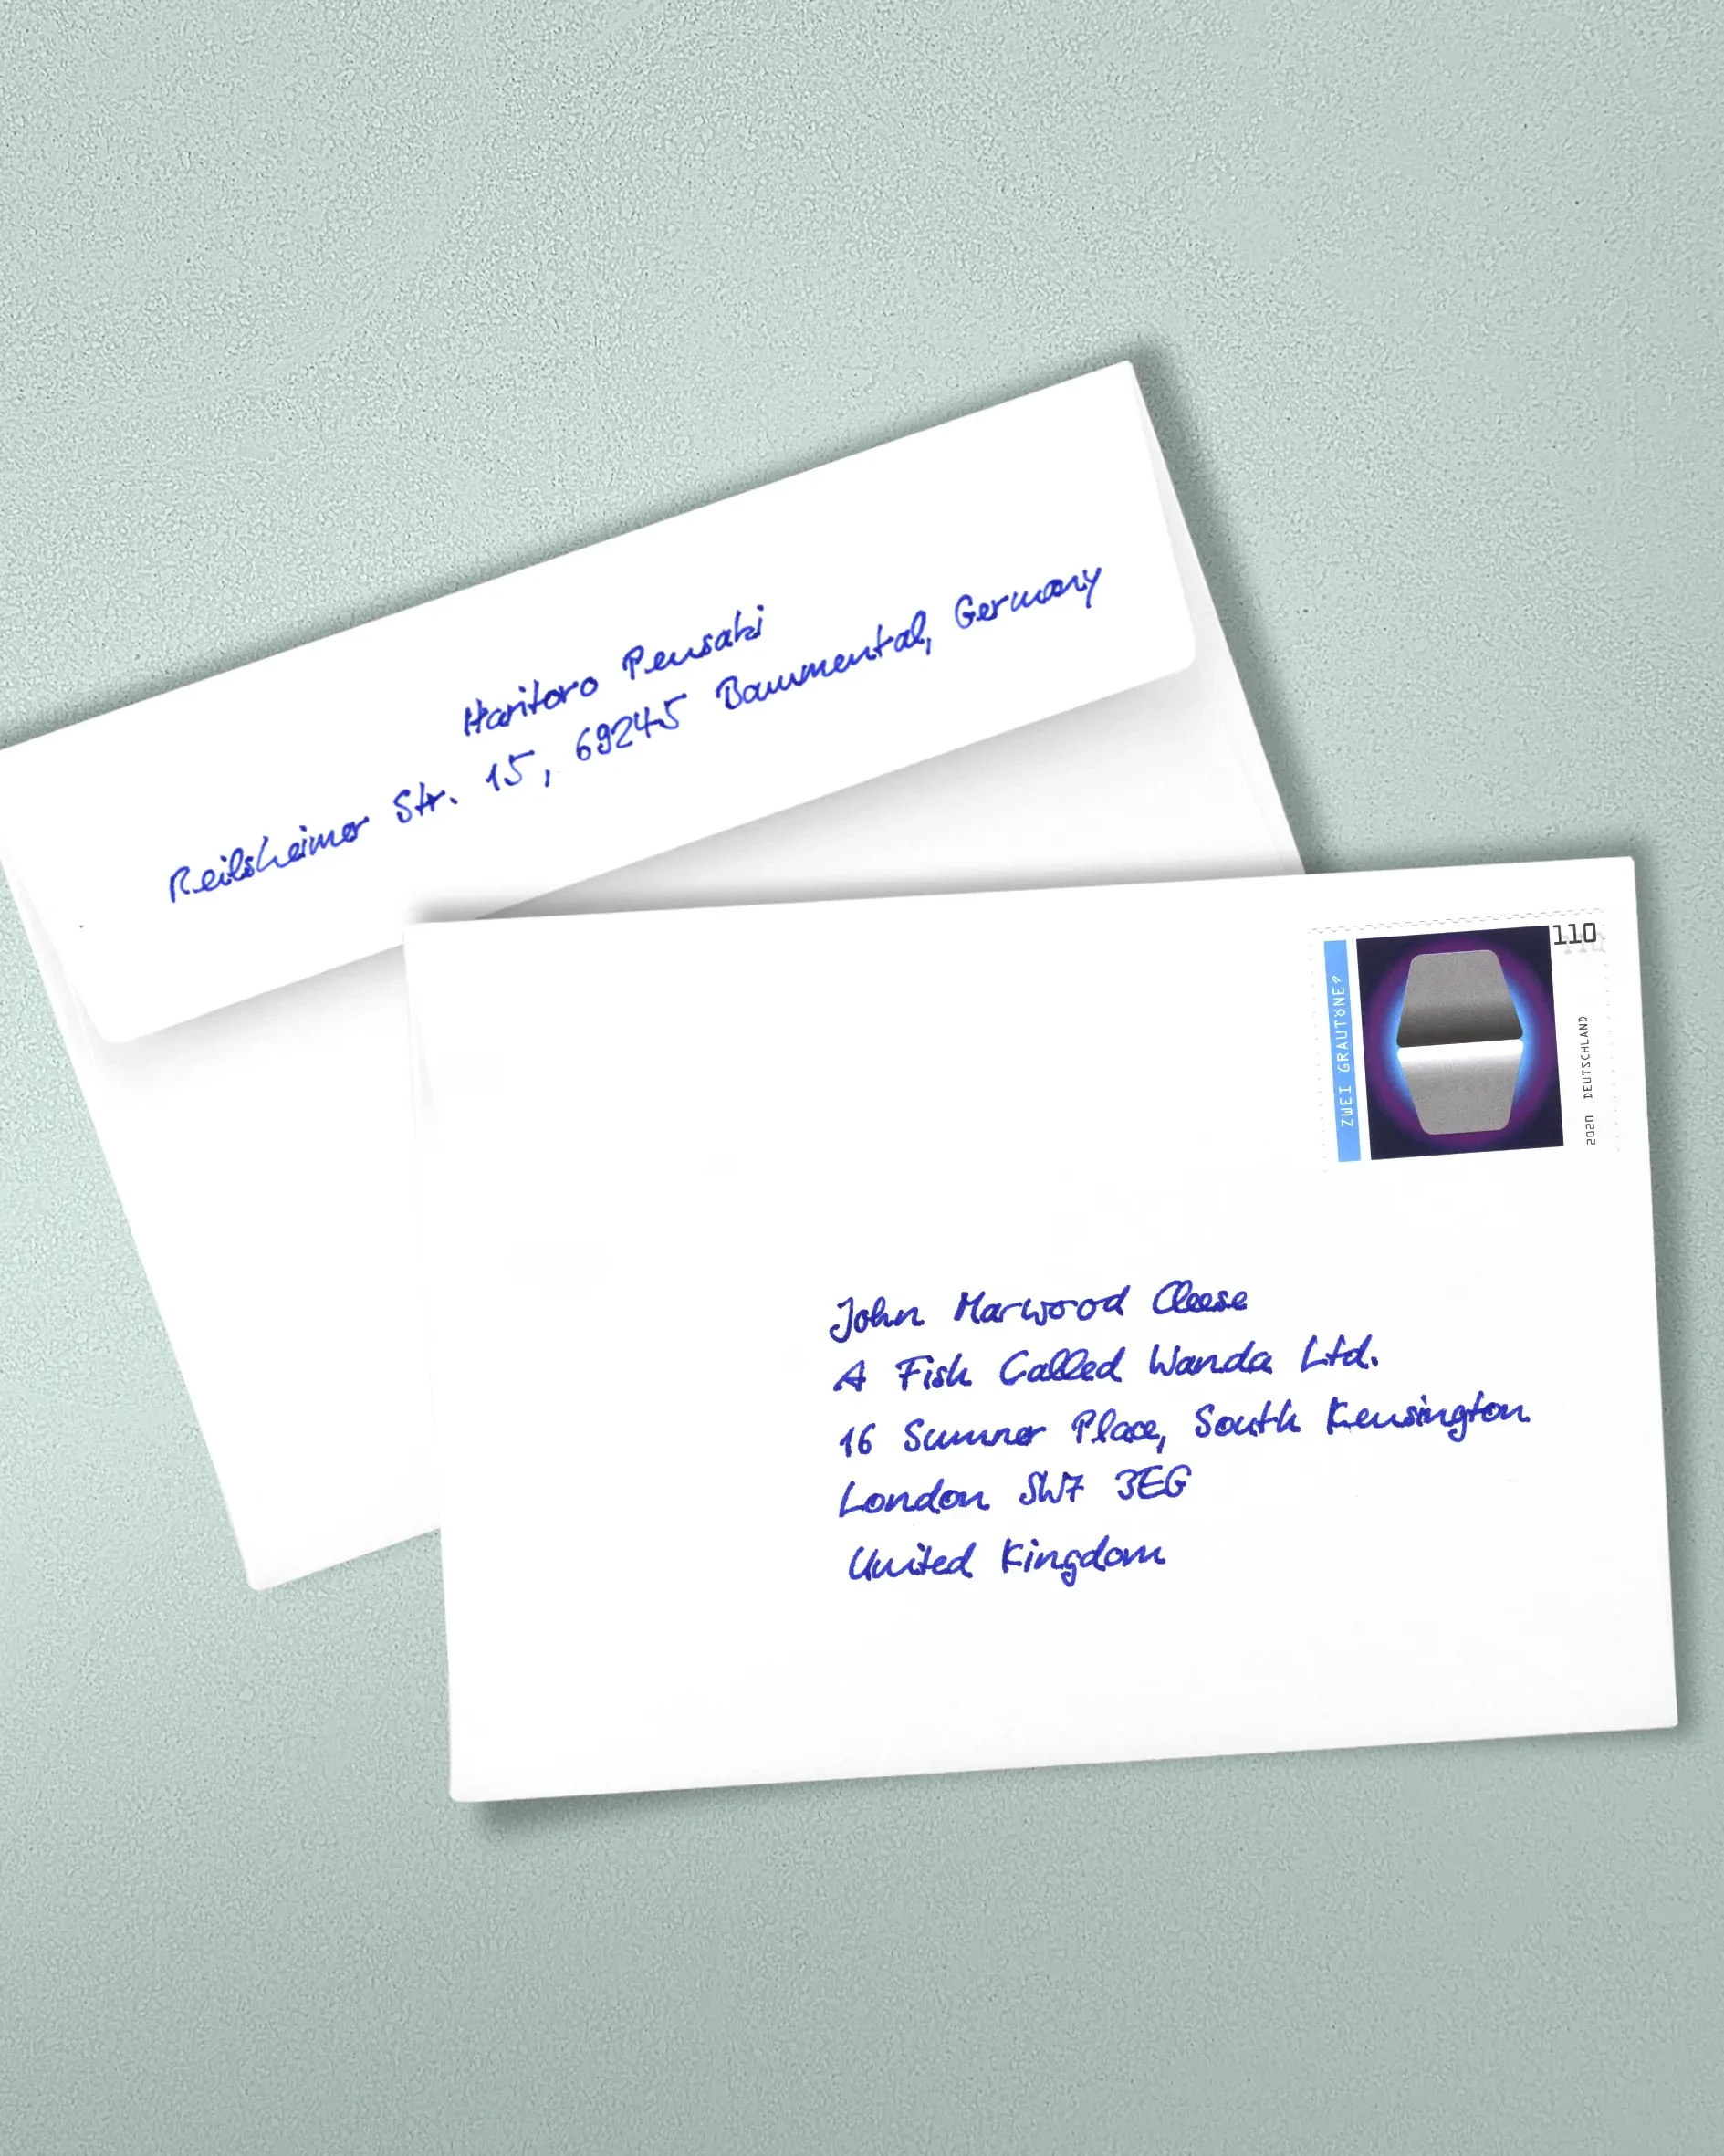 handwritten envelopes incl sender credentials - envelope2S